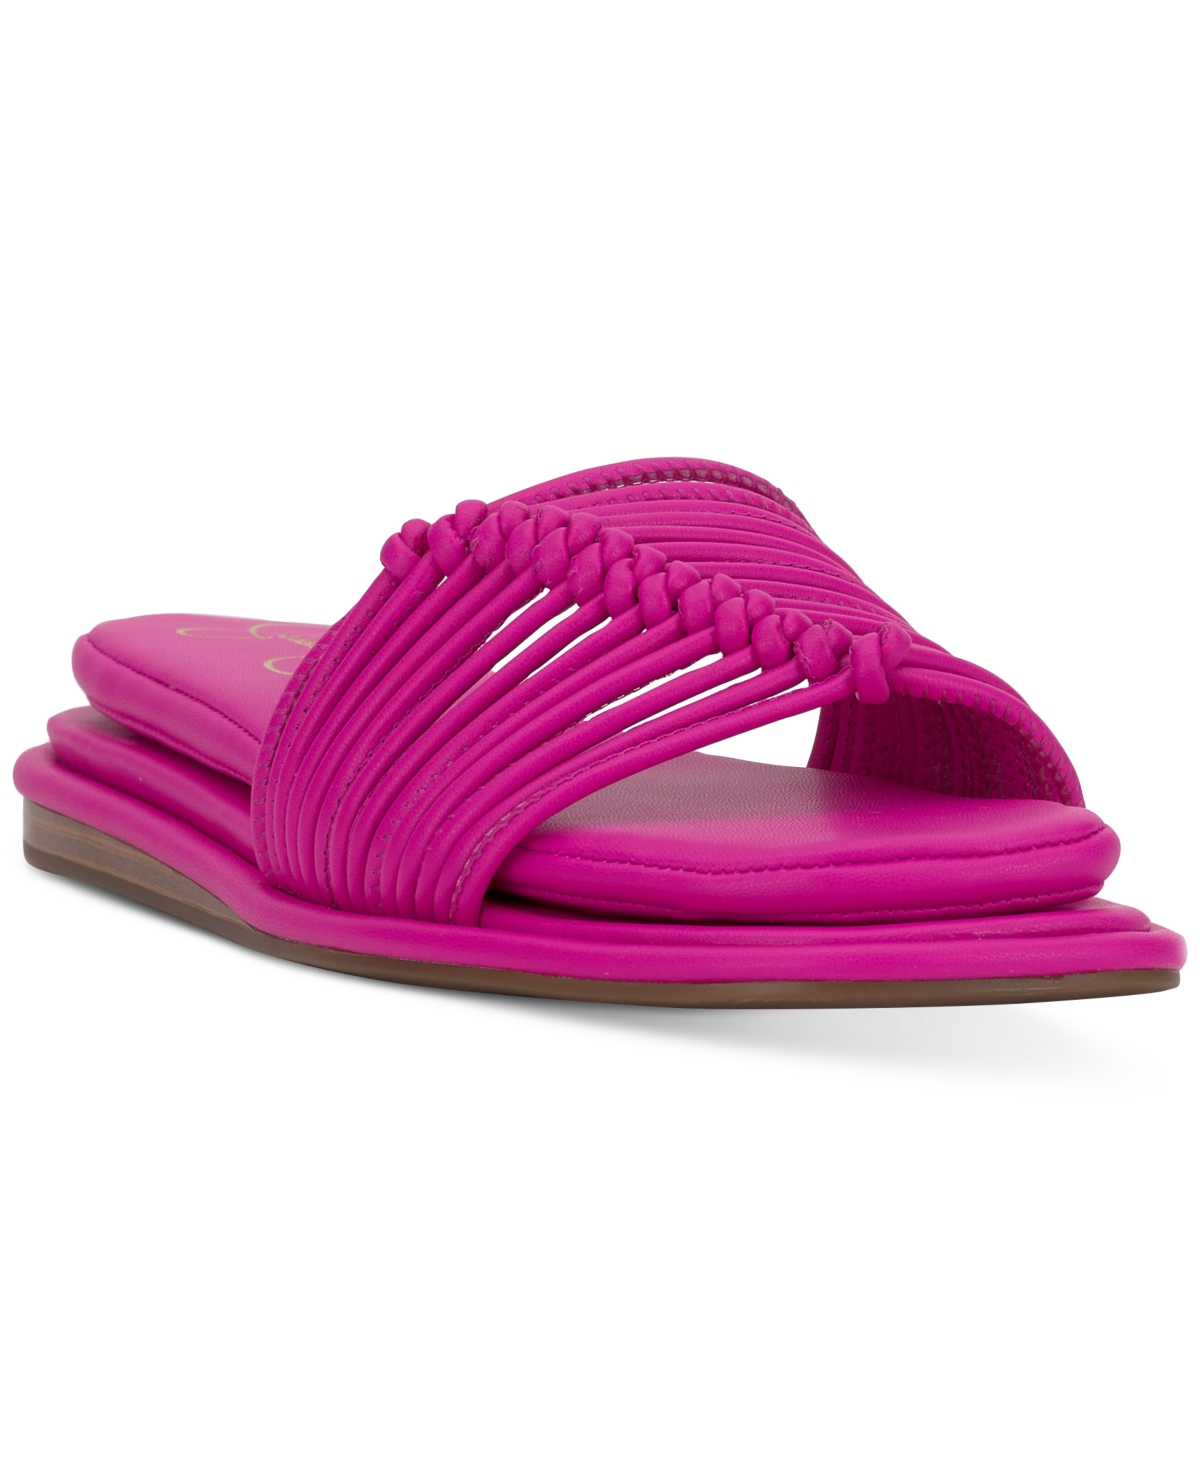 Women's Belarina Slip-On Strappy Slide Sandals - Bright White